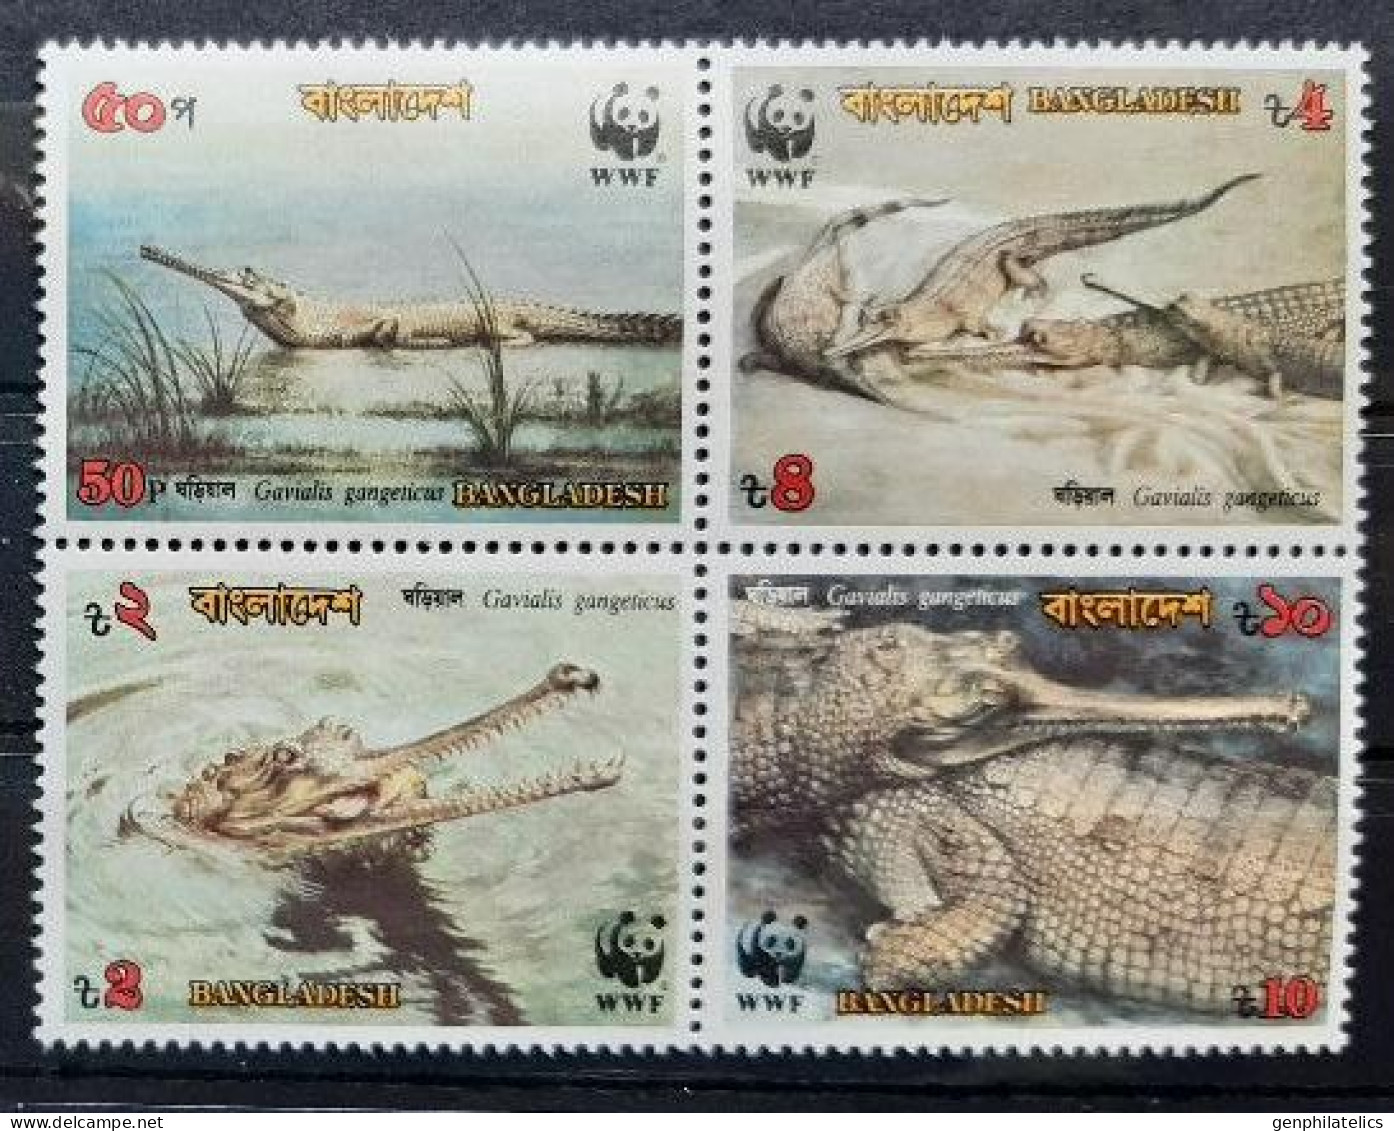 BANGLADESH 1990 FAUNA Animals. Reptiles. Crocodiles GAVIALS WWF - Fine Set MNH - Bangladesh